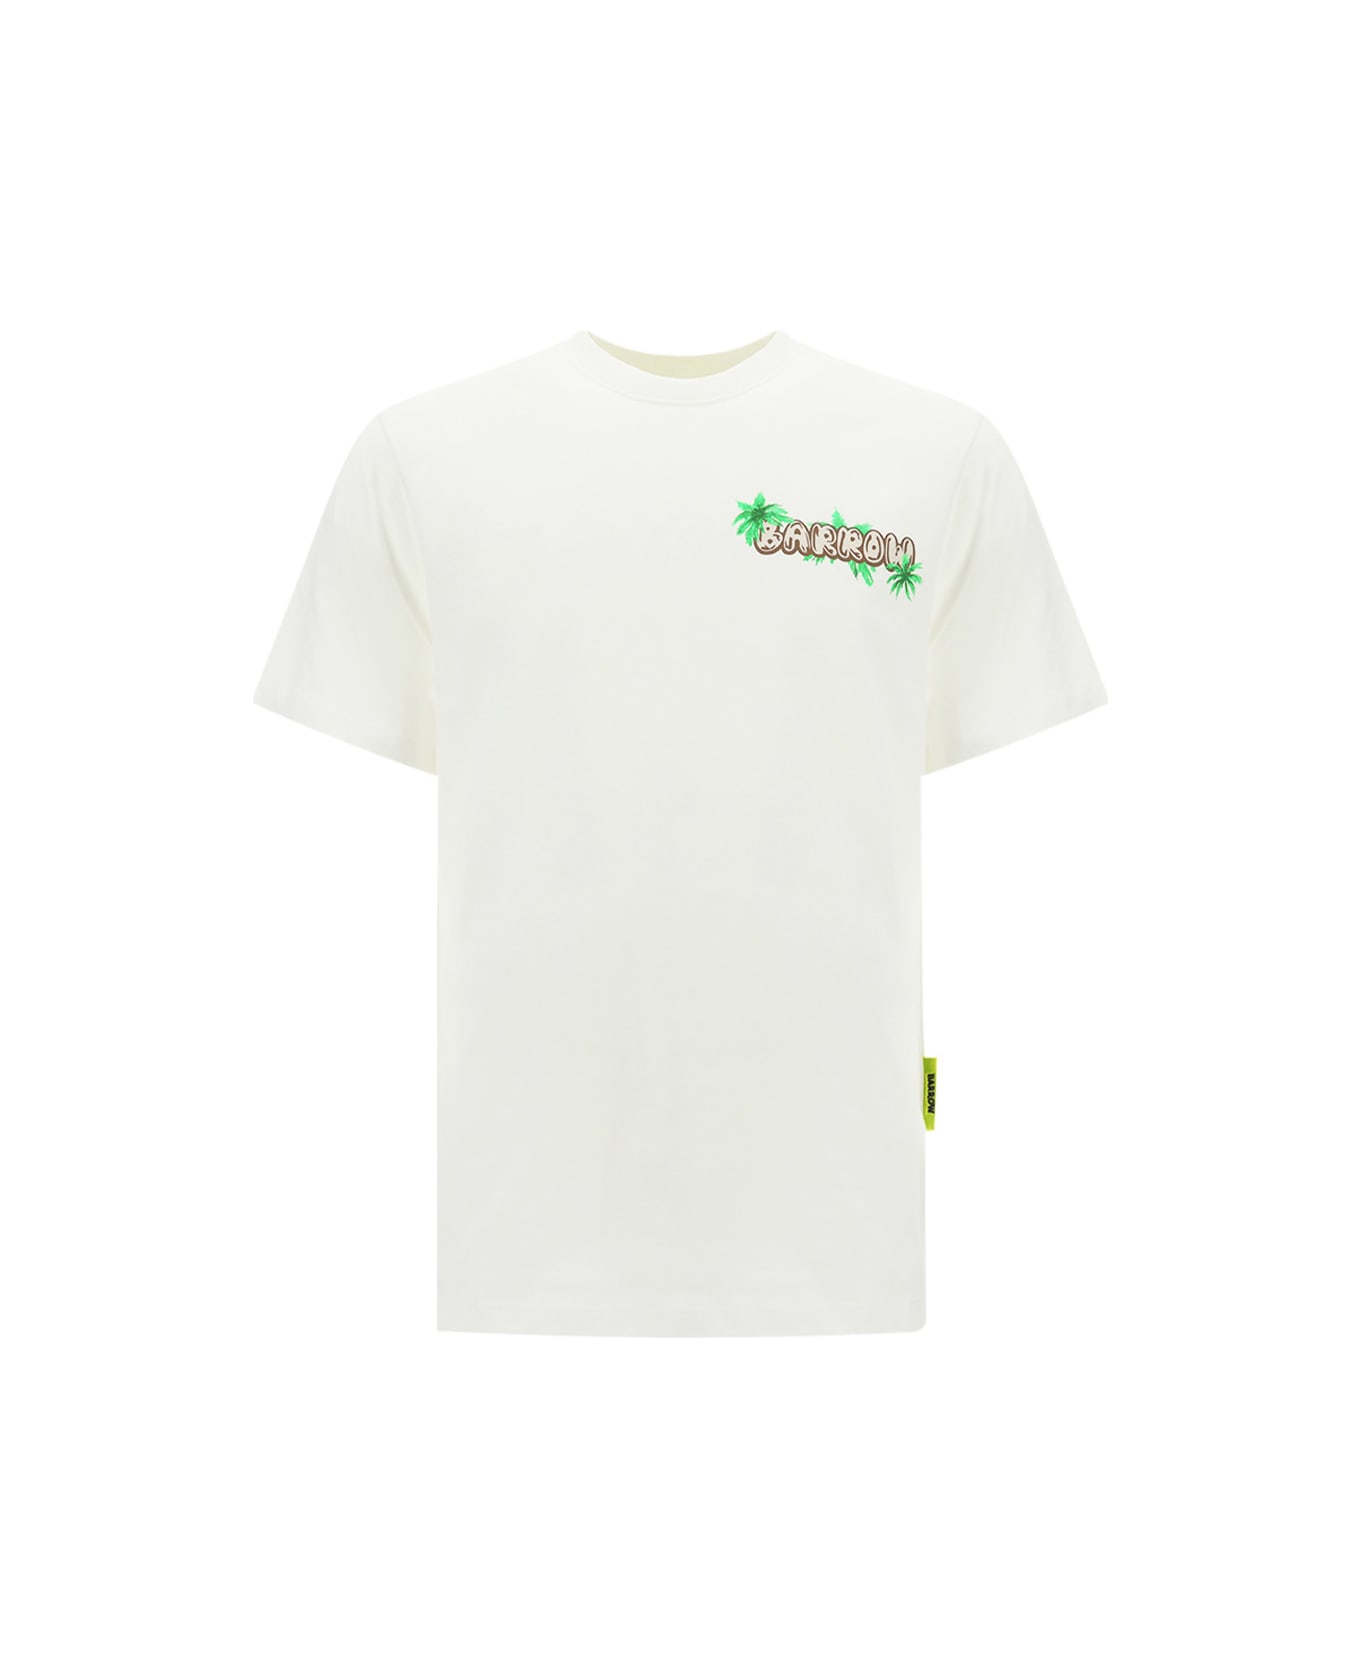 Barrow T-shirt - Off White